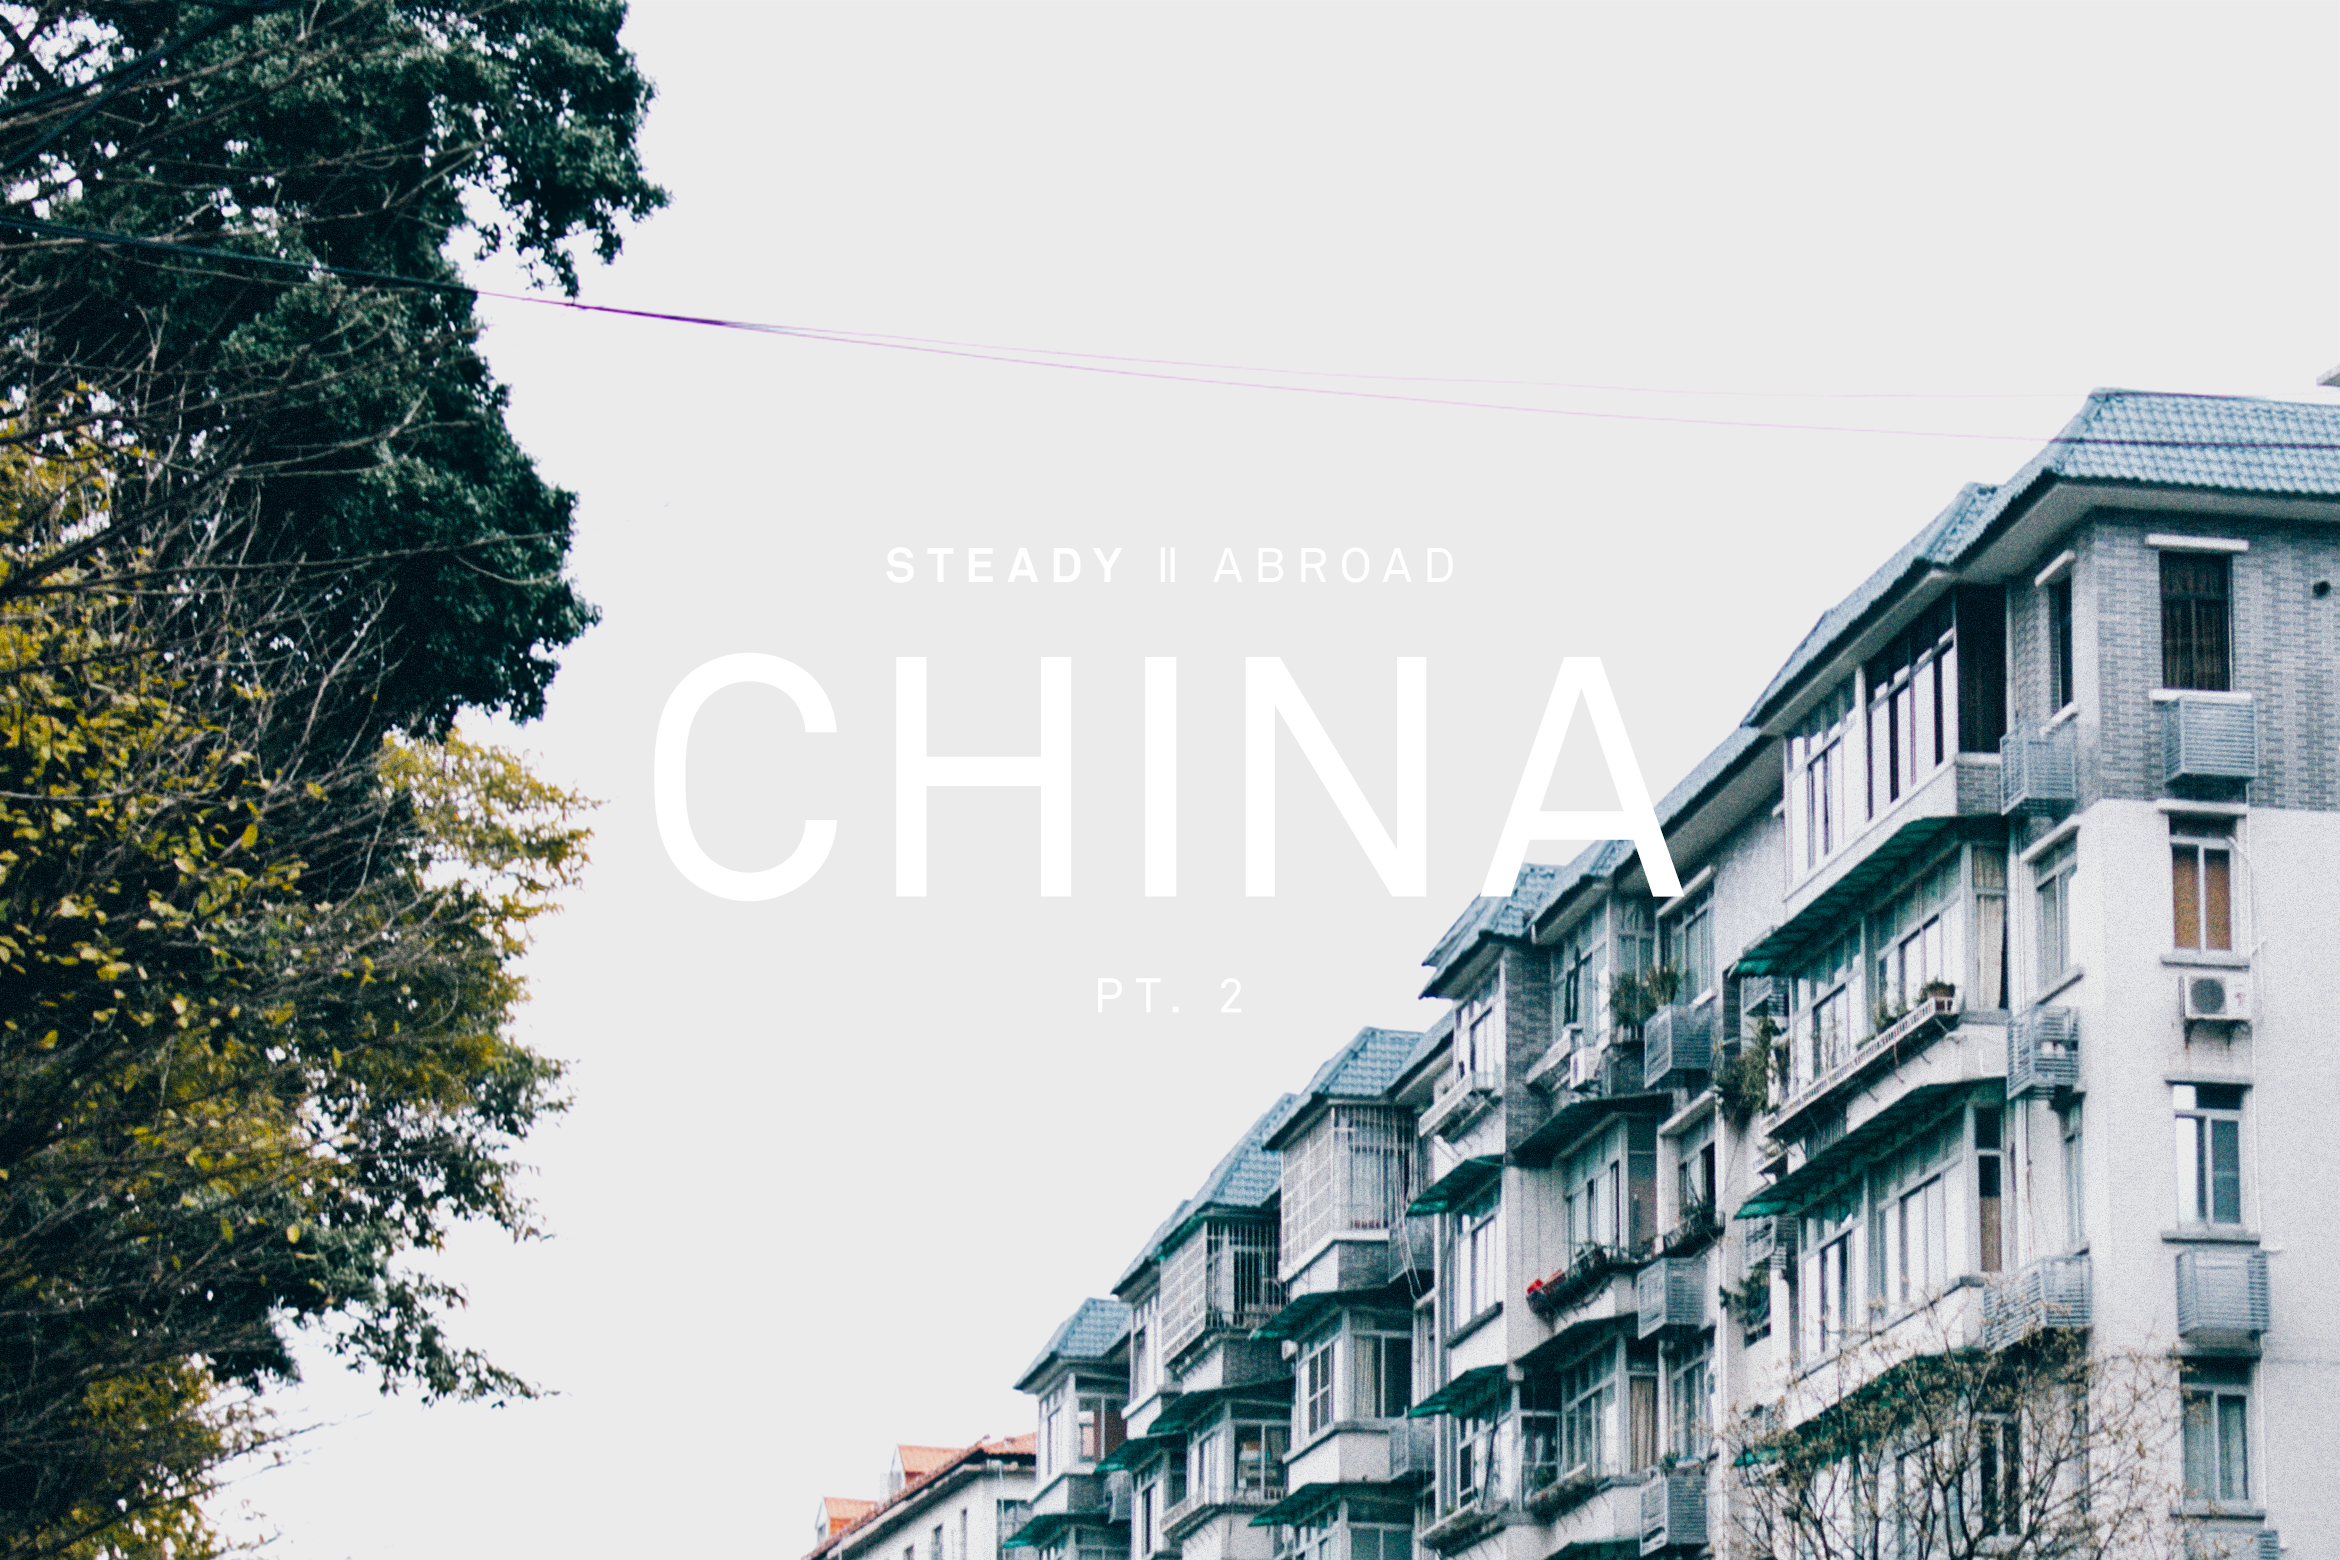 STEADY ABROAD: CHINA PT.2